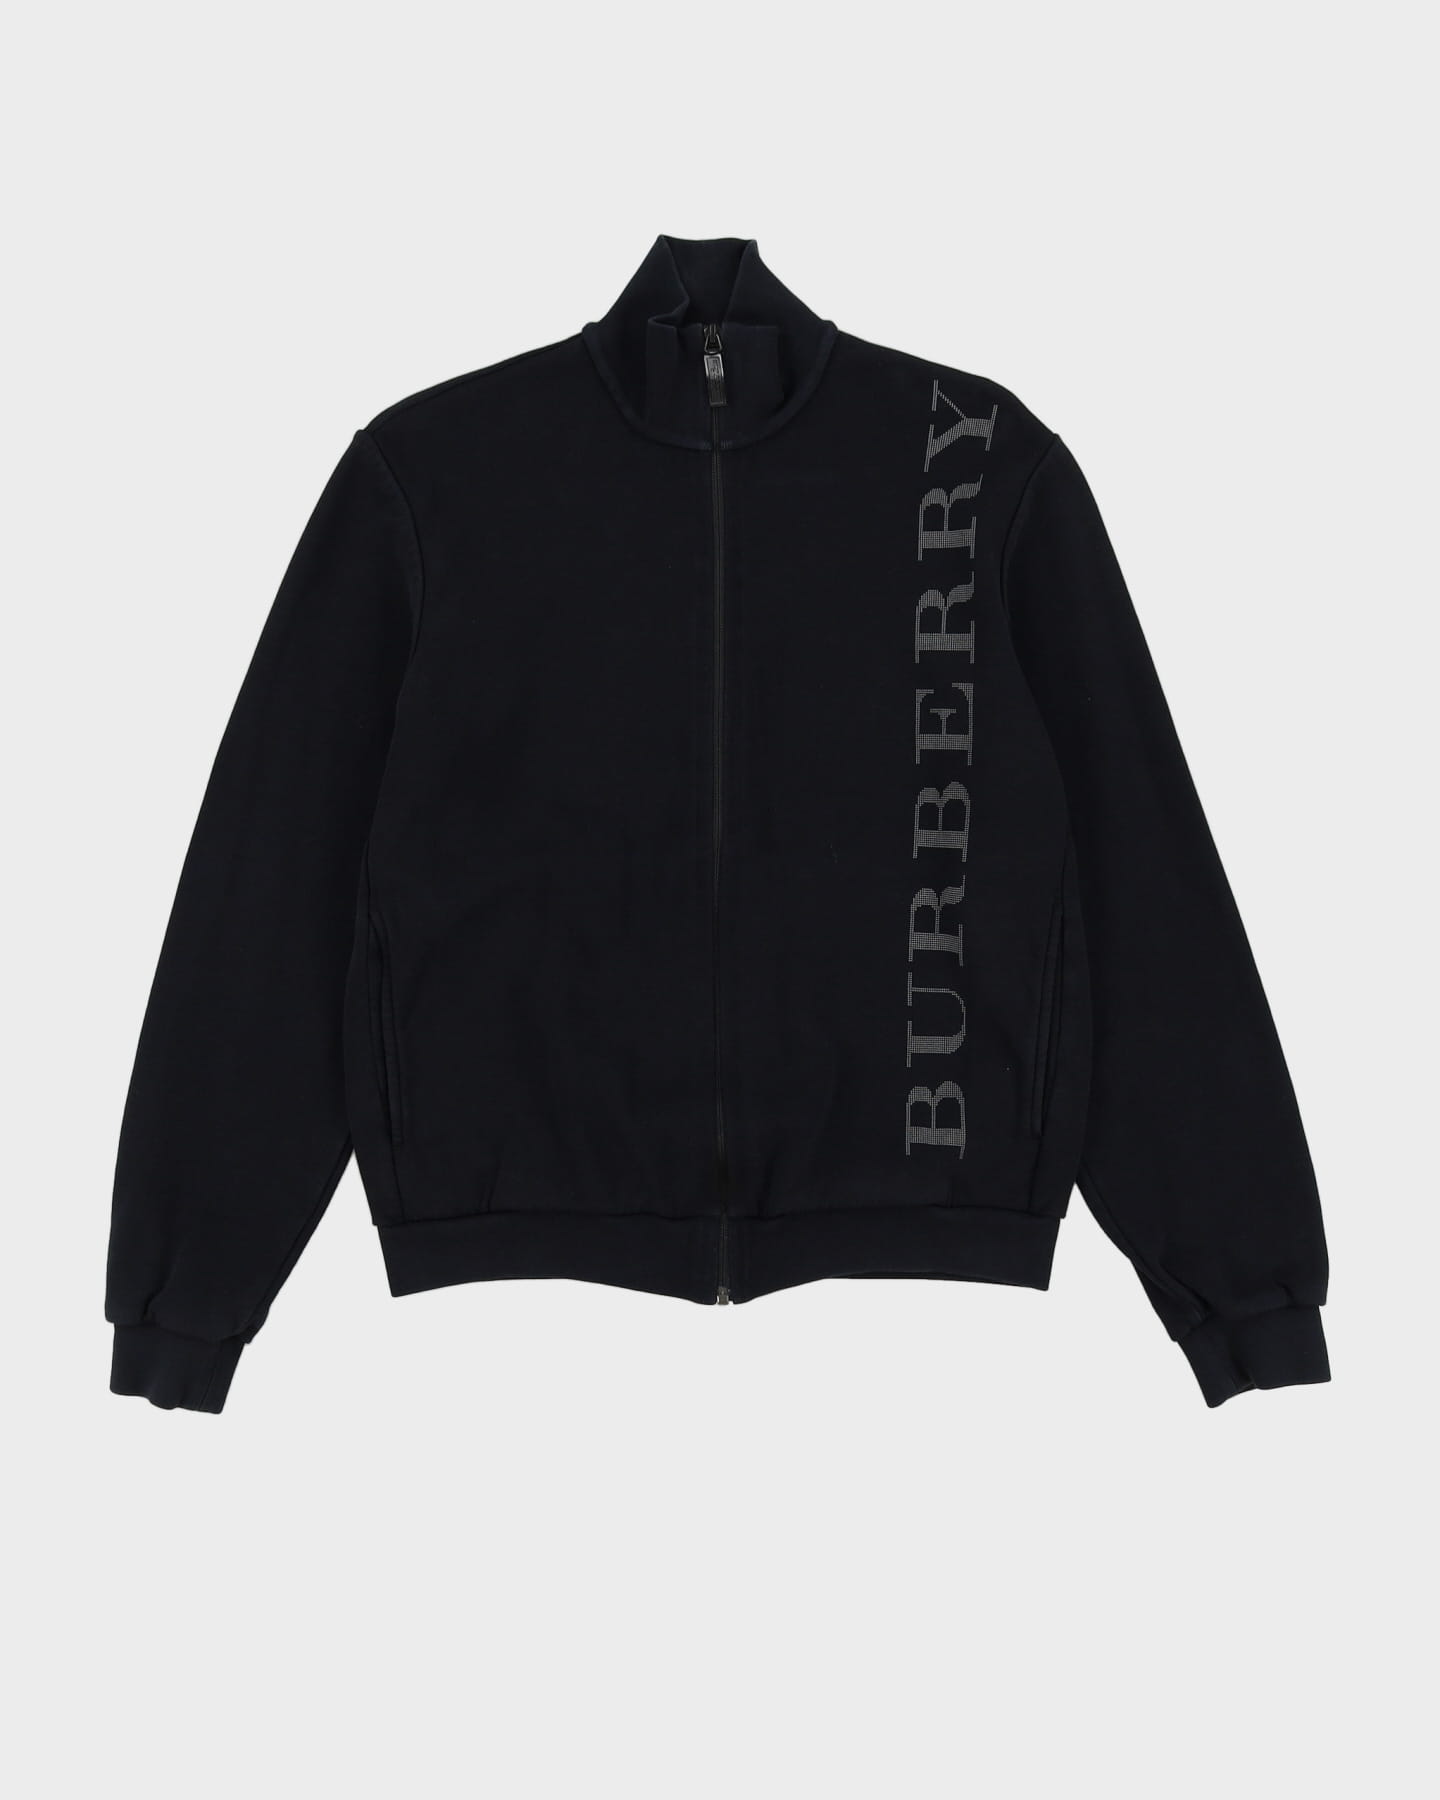 Burberry Black Full-Zip Sweatshirt - M